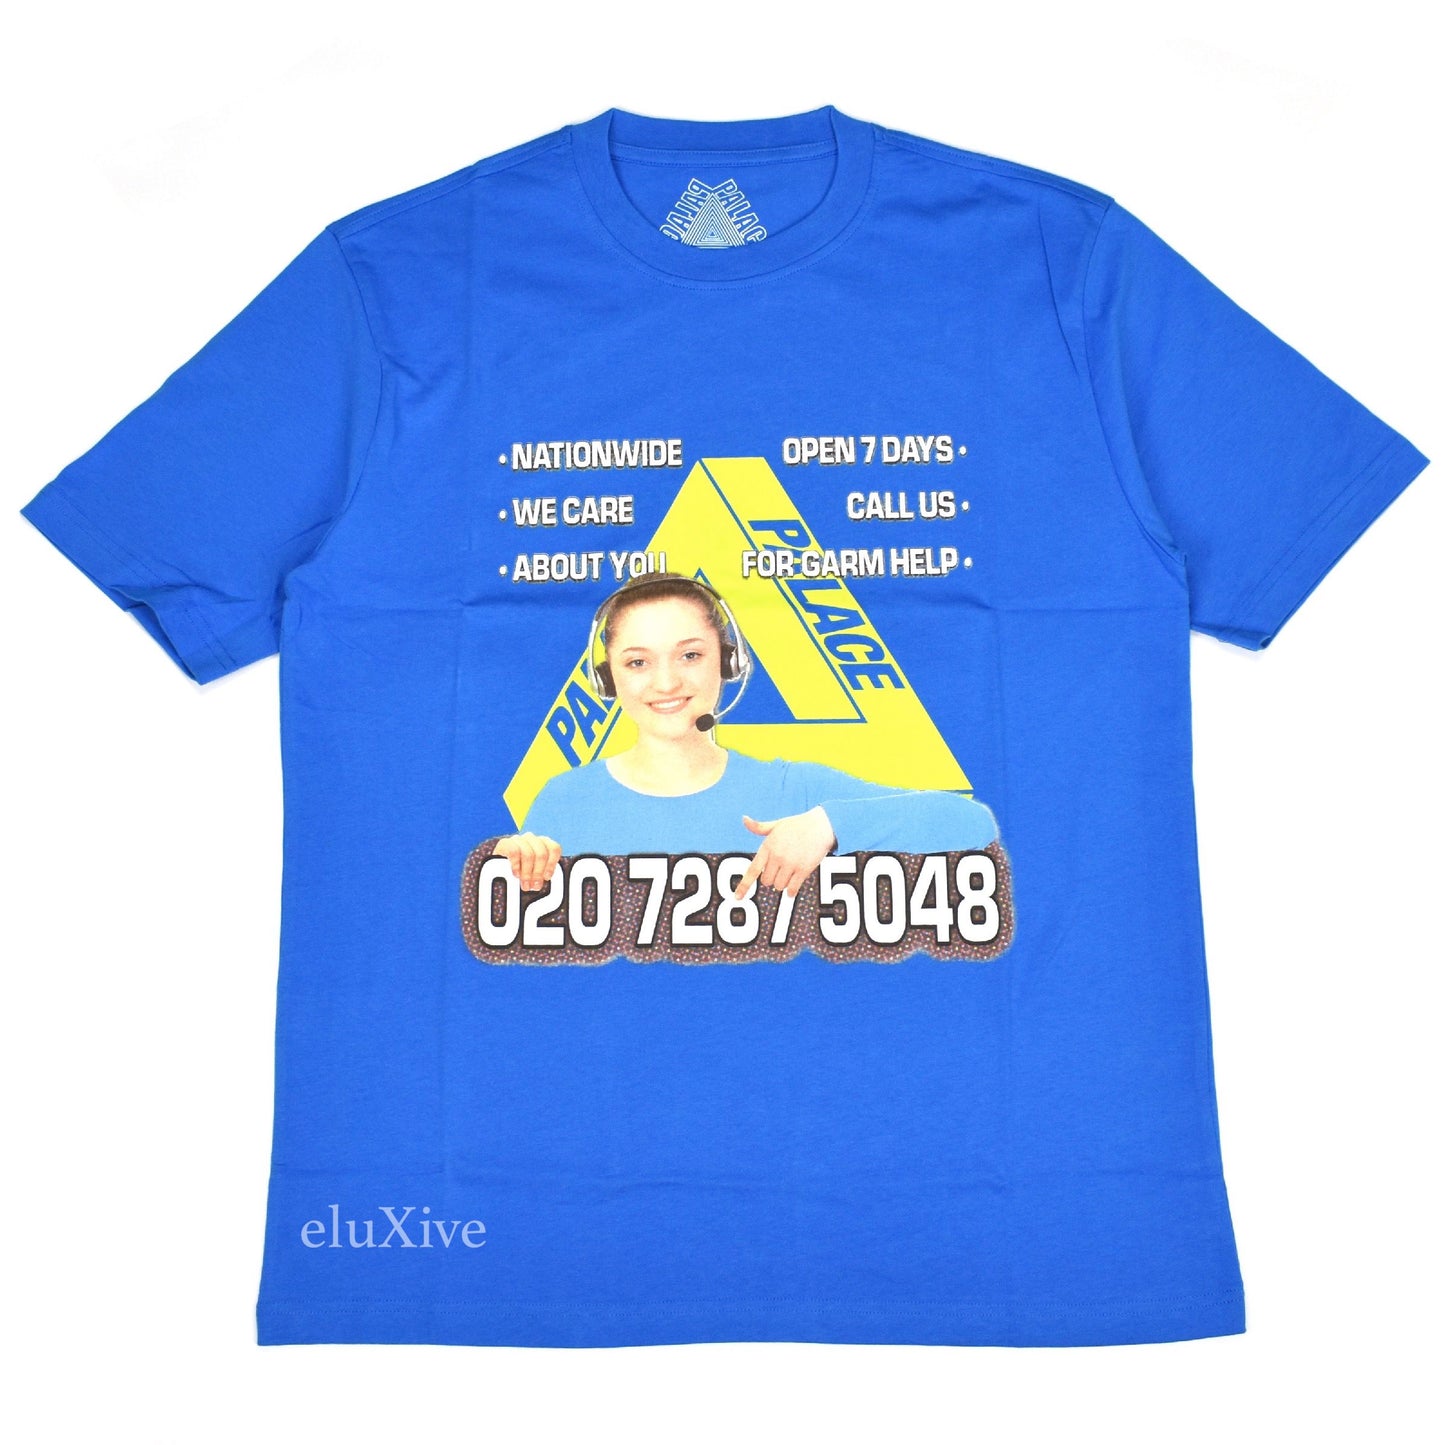 Palace - Bell Man Tri-Ferg Logo Phone Number T-Shirt (Blue)